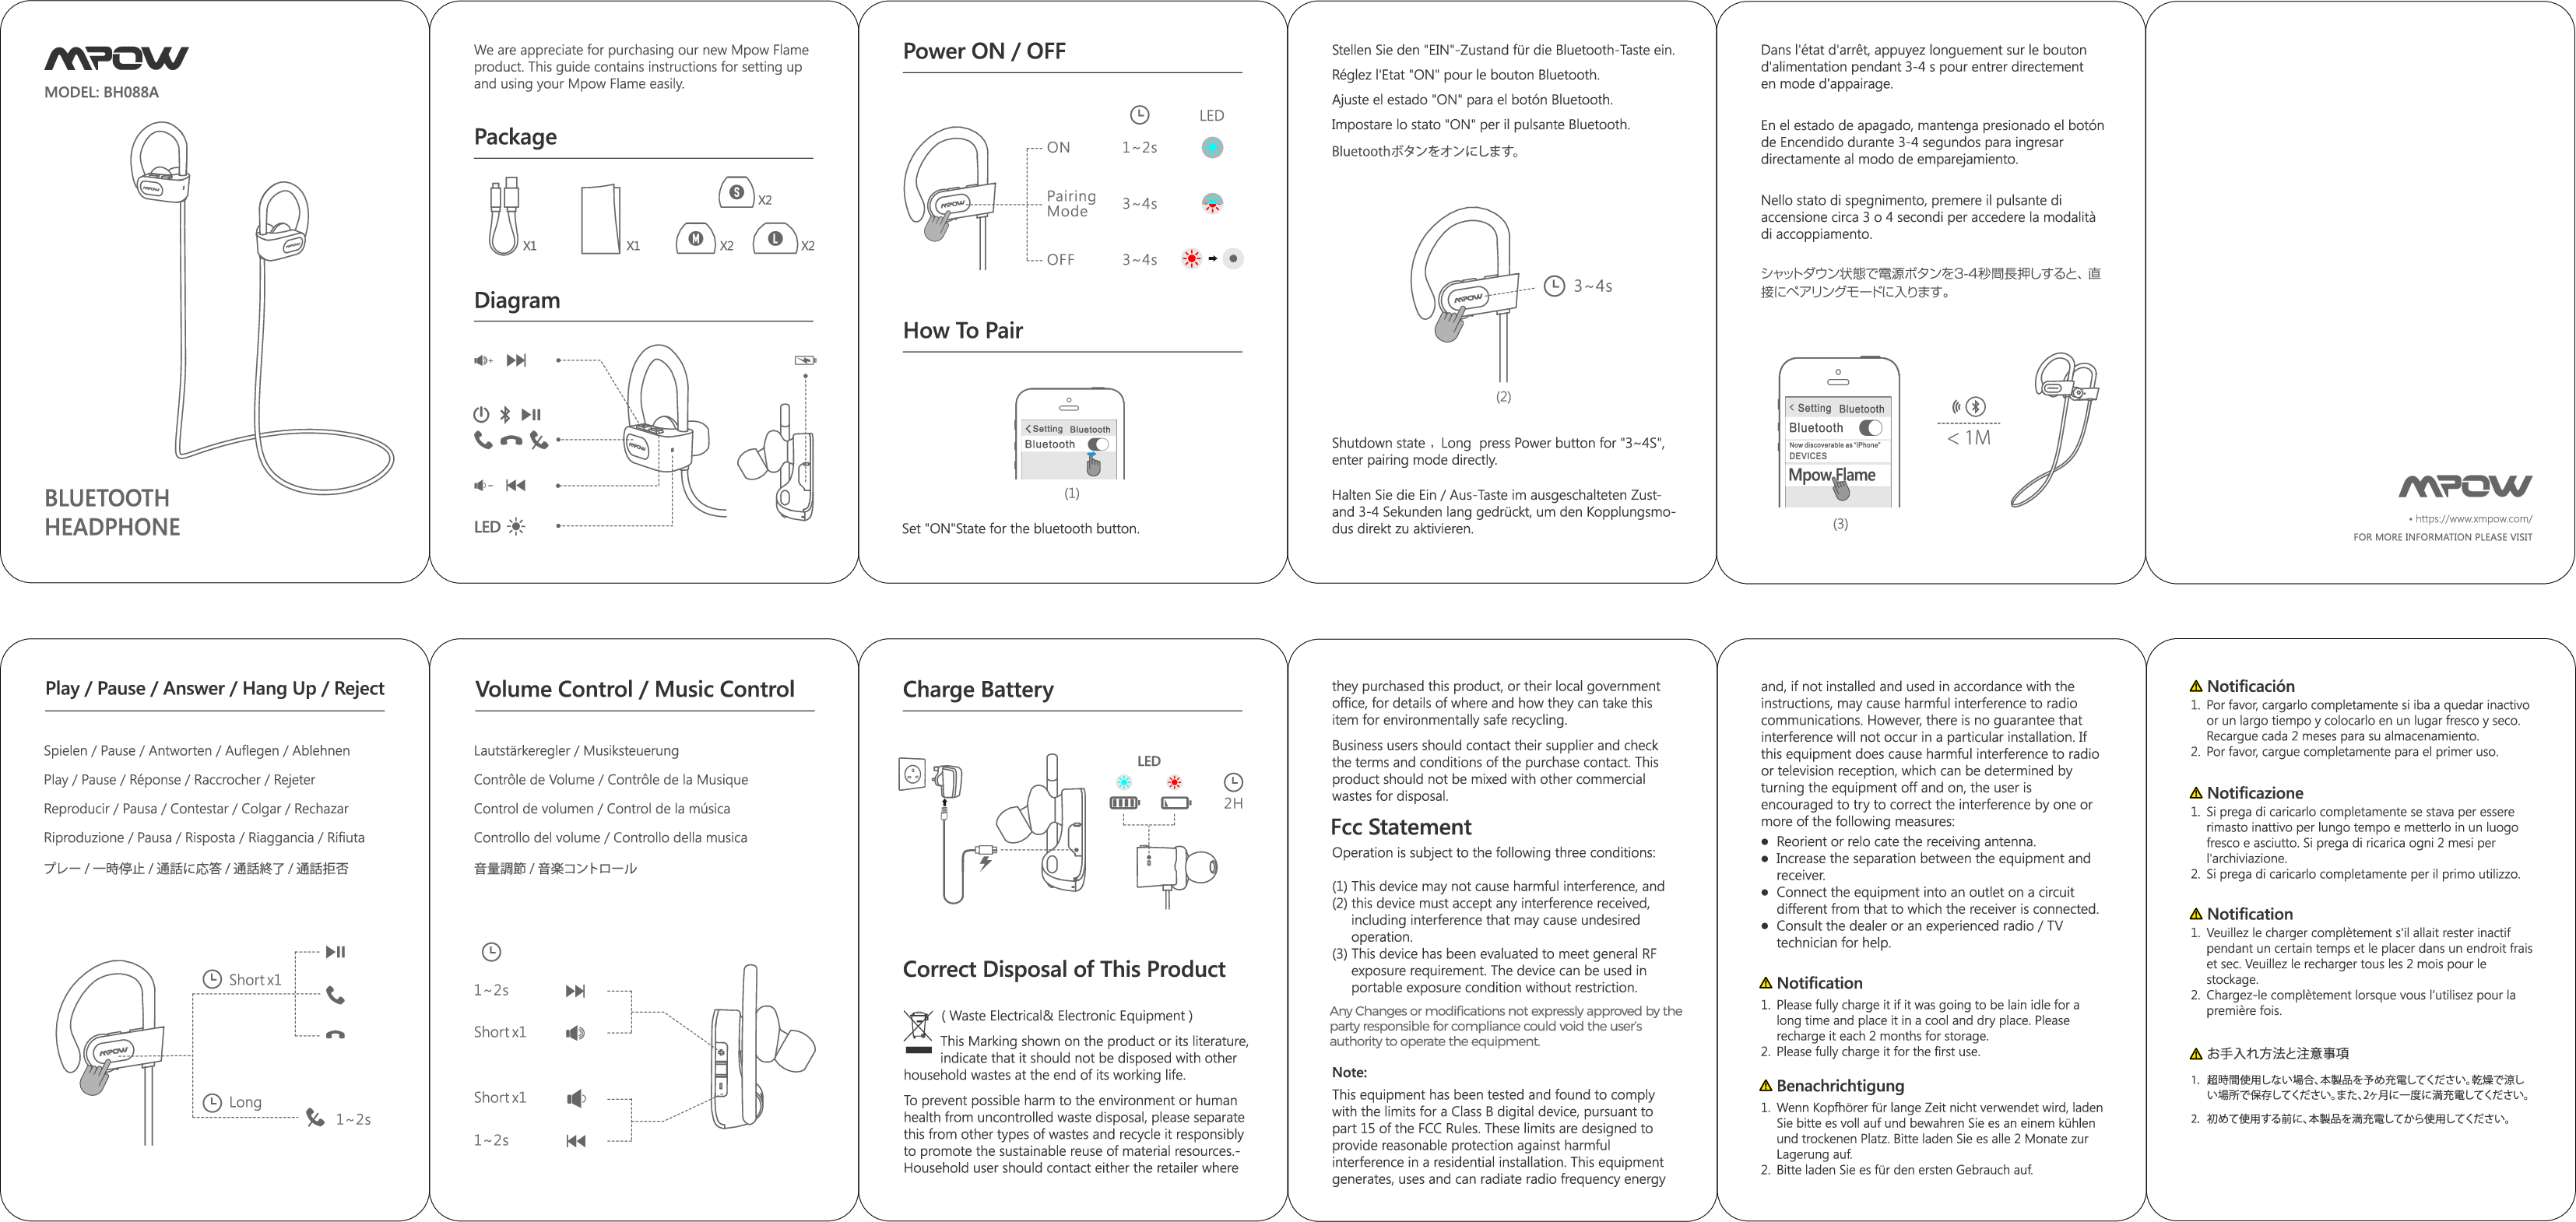 Bpm Headphones Bluetooth Manual